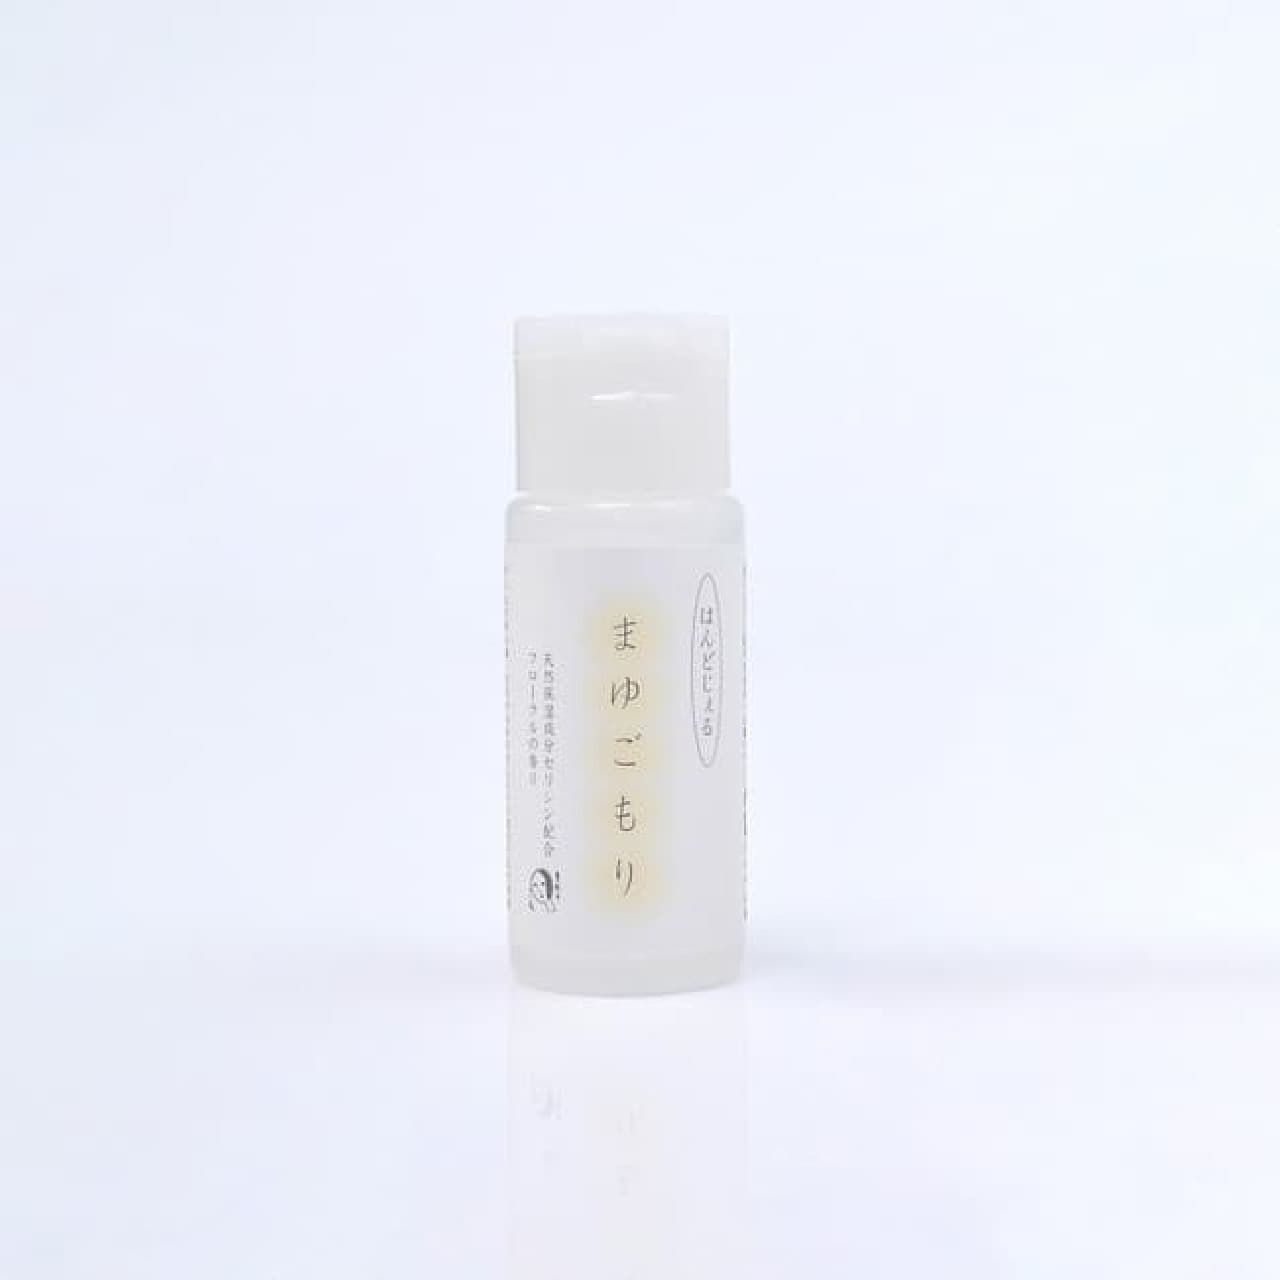 Introducing Yojiya "Mayugomori Hand Jewel" --For disinfecting and moisturizing on the go! Soft floral scent